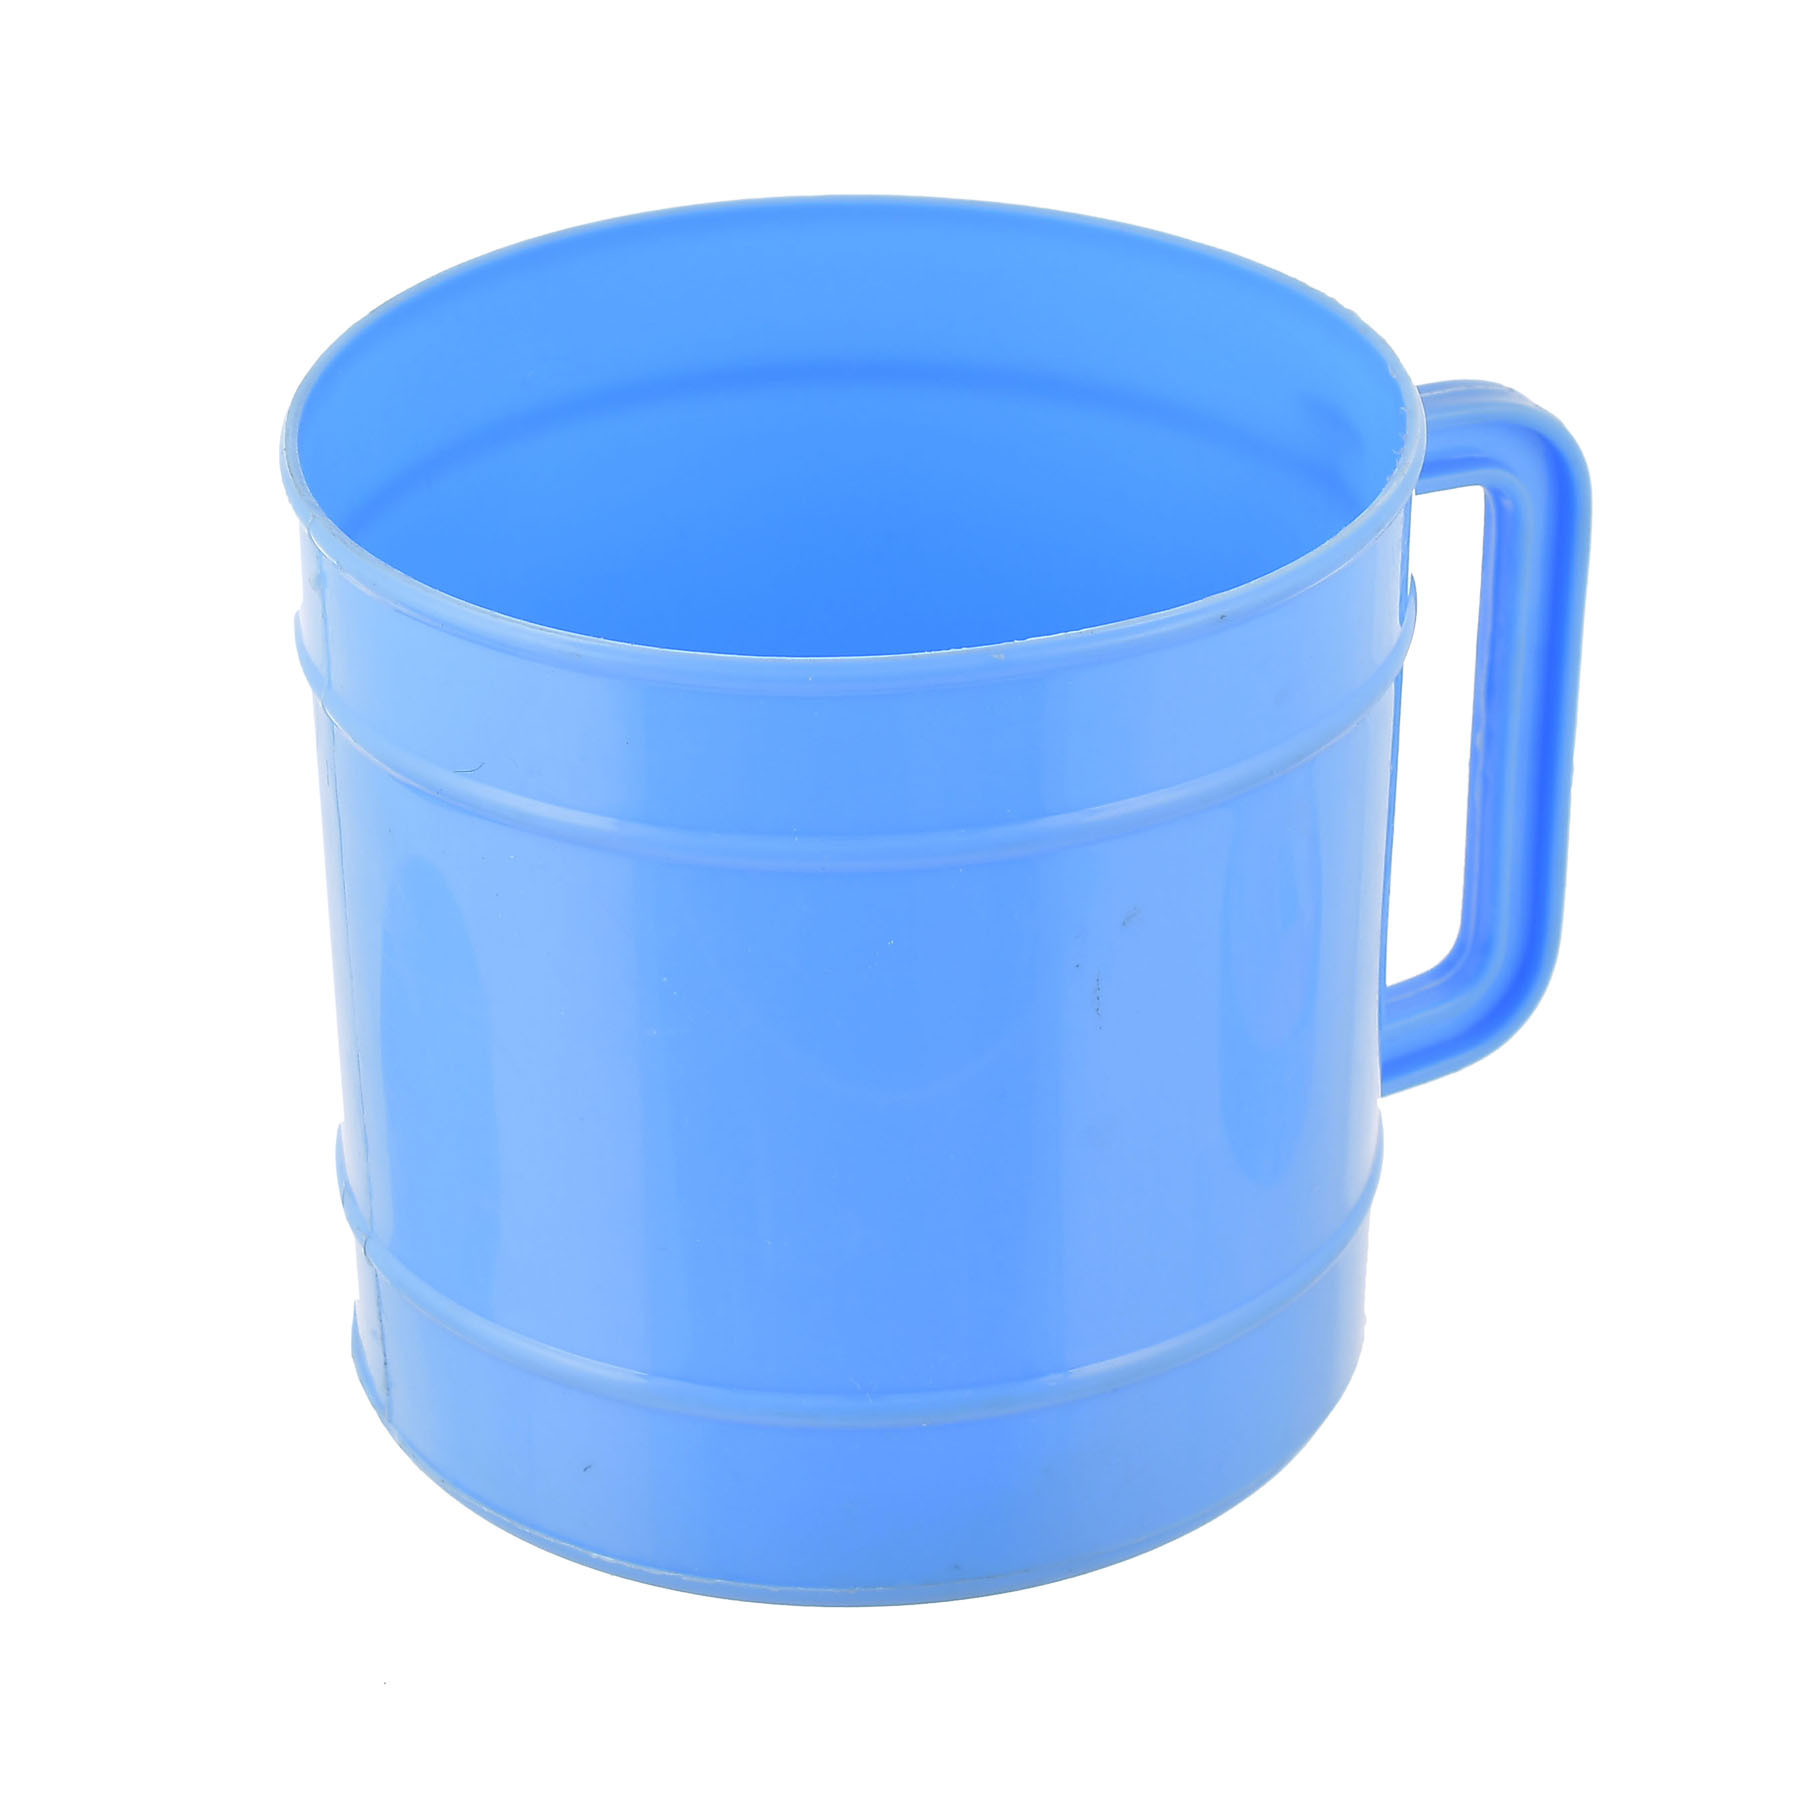 Kuber Industries Plastic Bathroom Mug, 1 Ltr., Pack of 6 (Blue & Green & Pink)